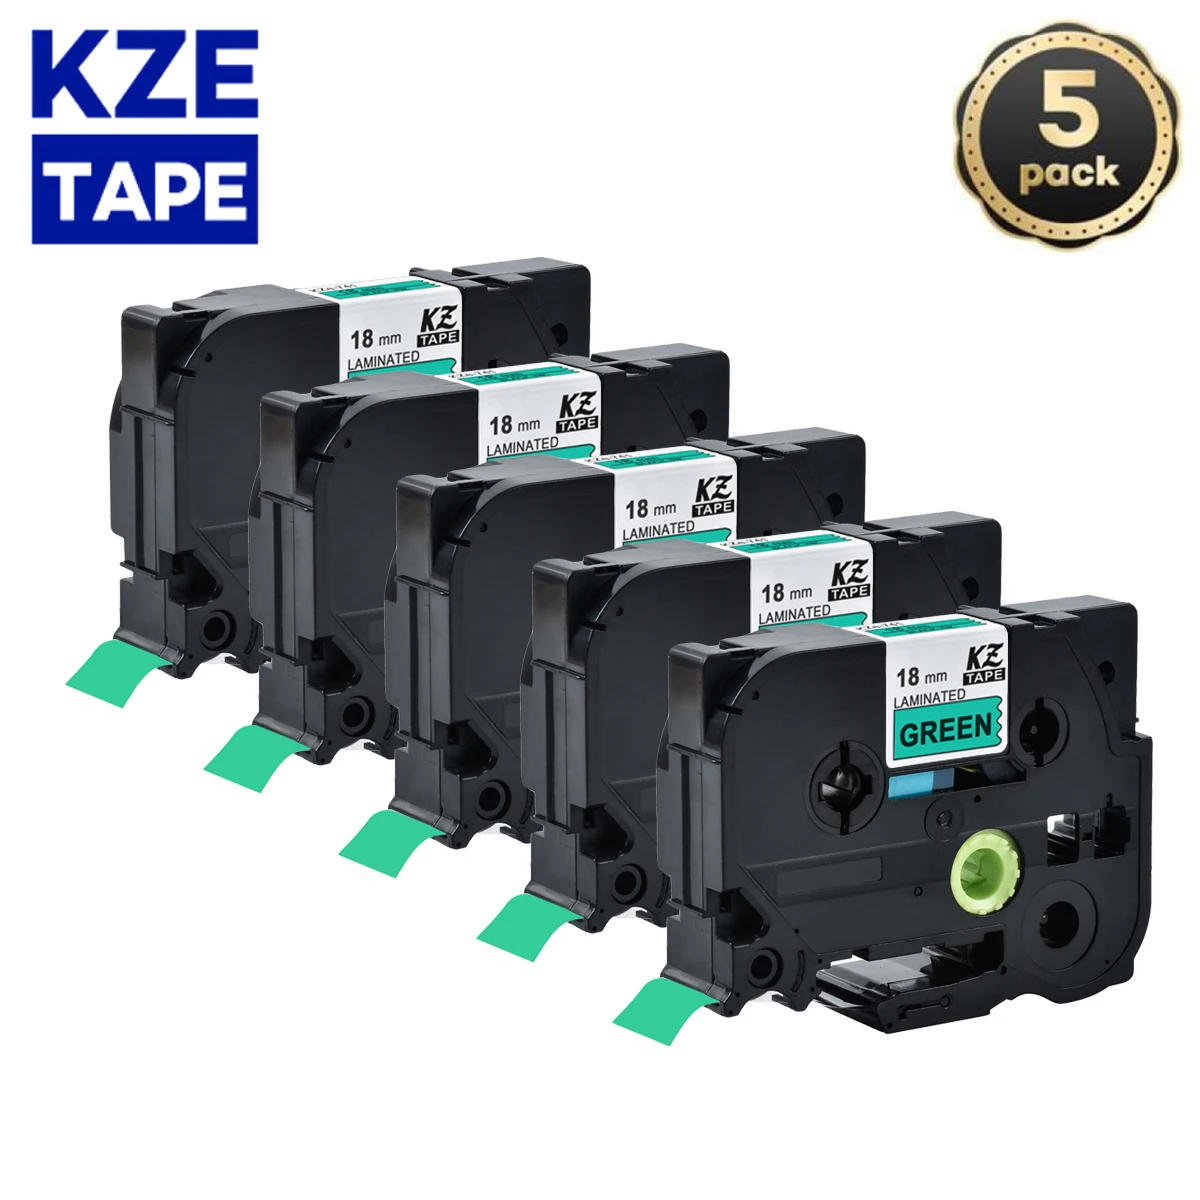 

KZE 5pcs 741 black on green 18mm laminated tze tape Compatible Brother tze741 TZe 741 TZ-741 p-touch Label printer tz741